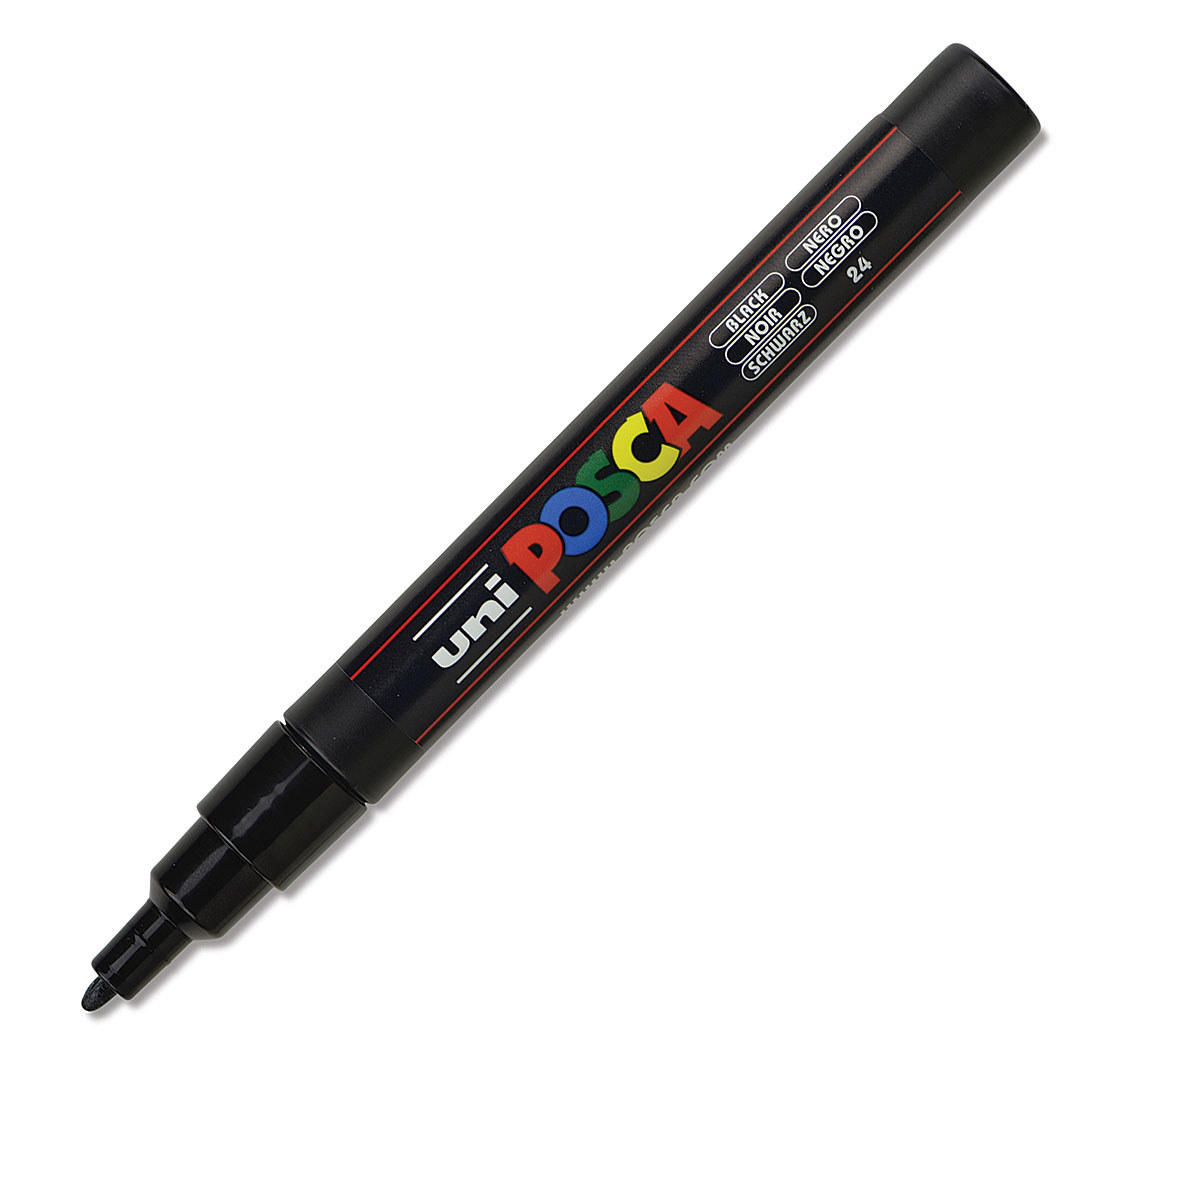 Uni-Posca Paint Marker - Black, Fine, Bullet Tip, 1.5 mm